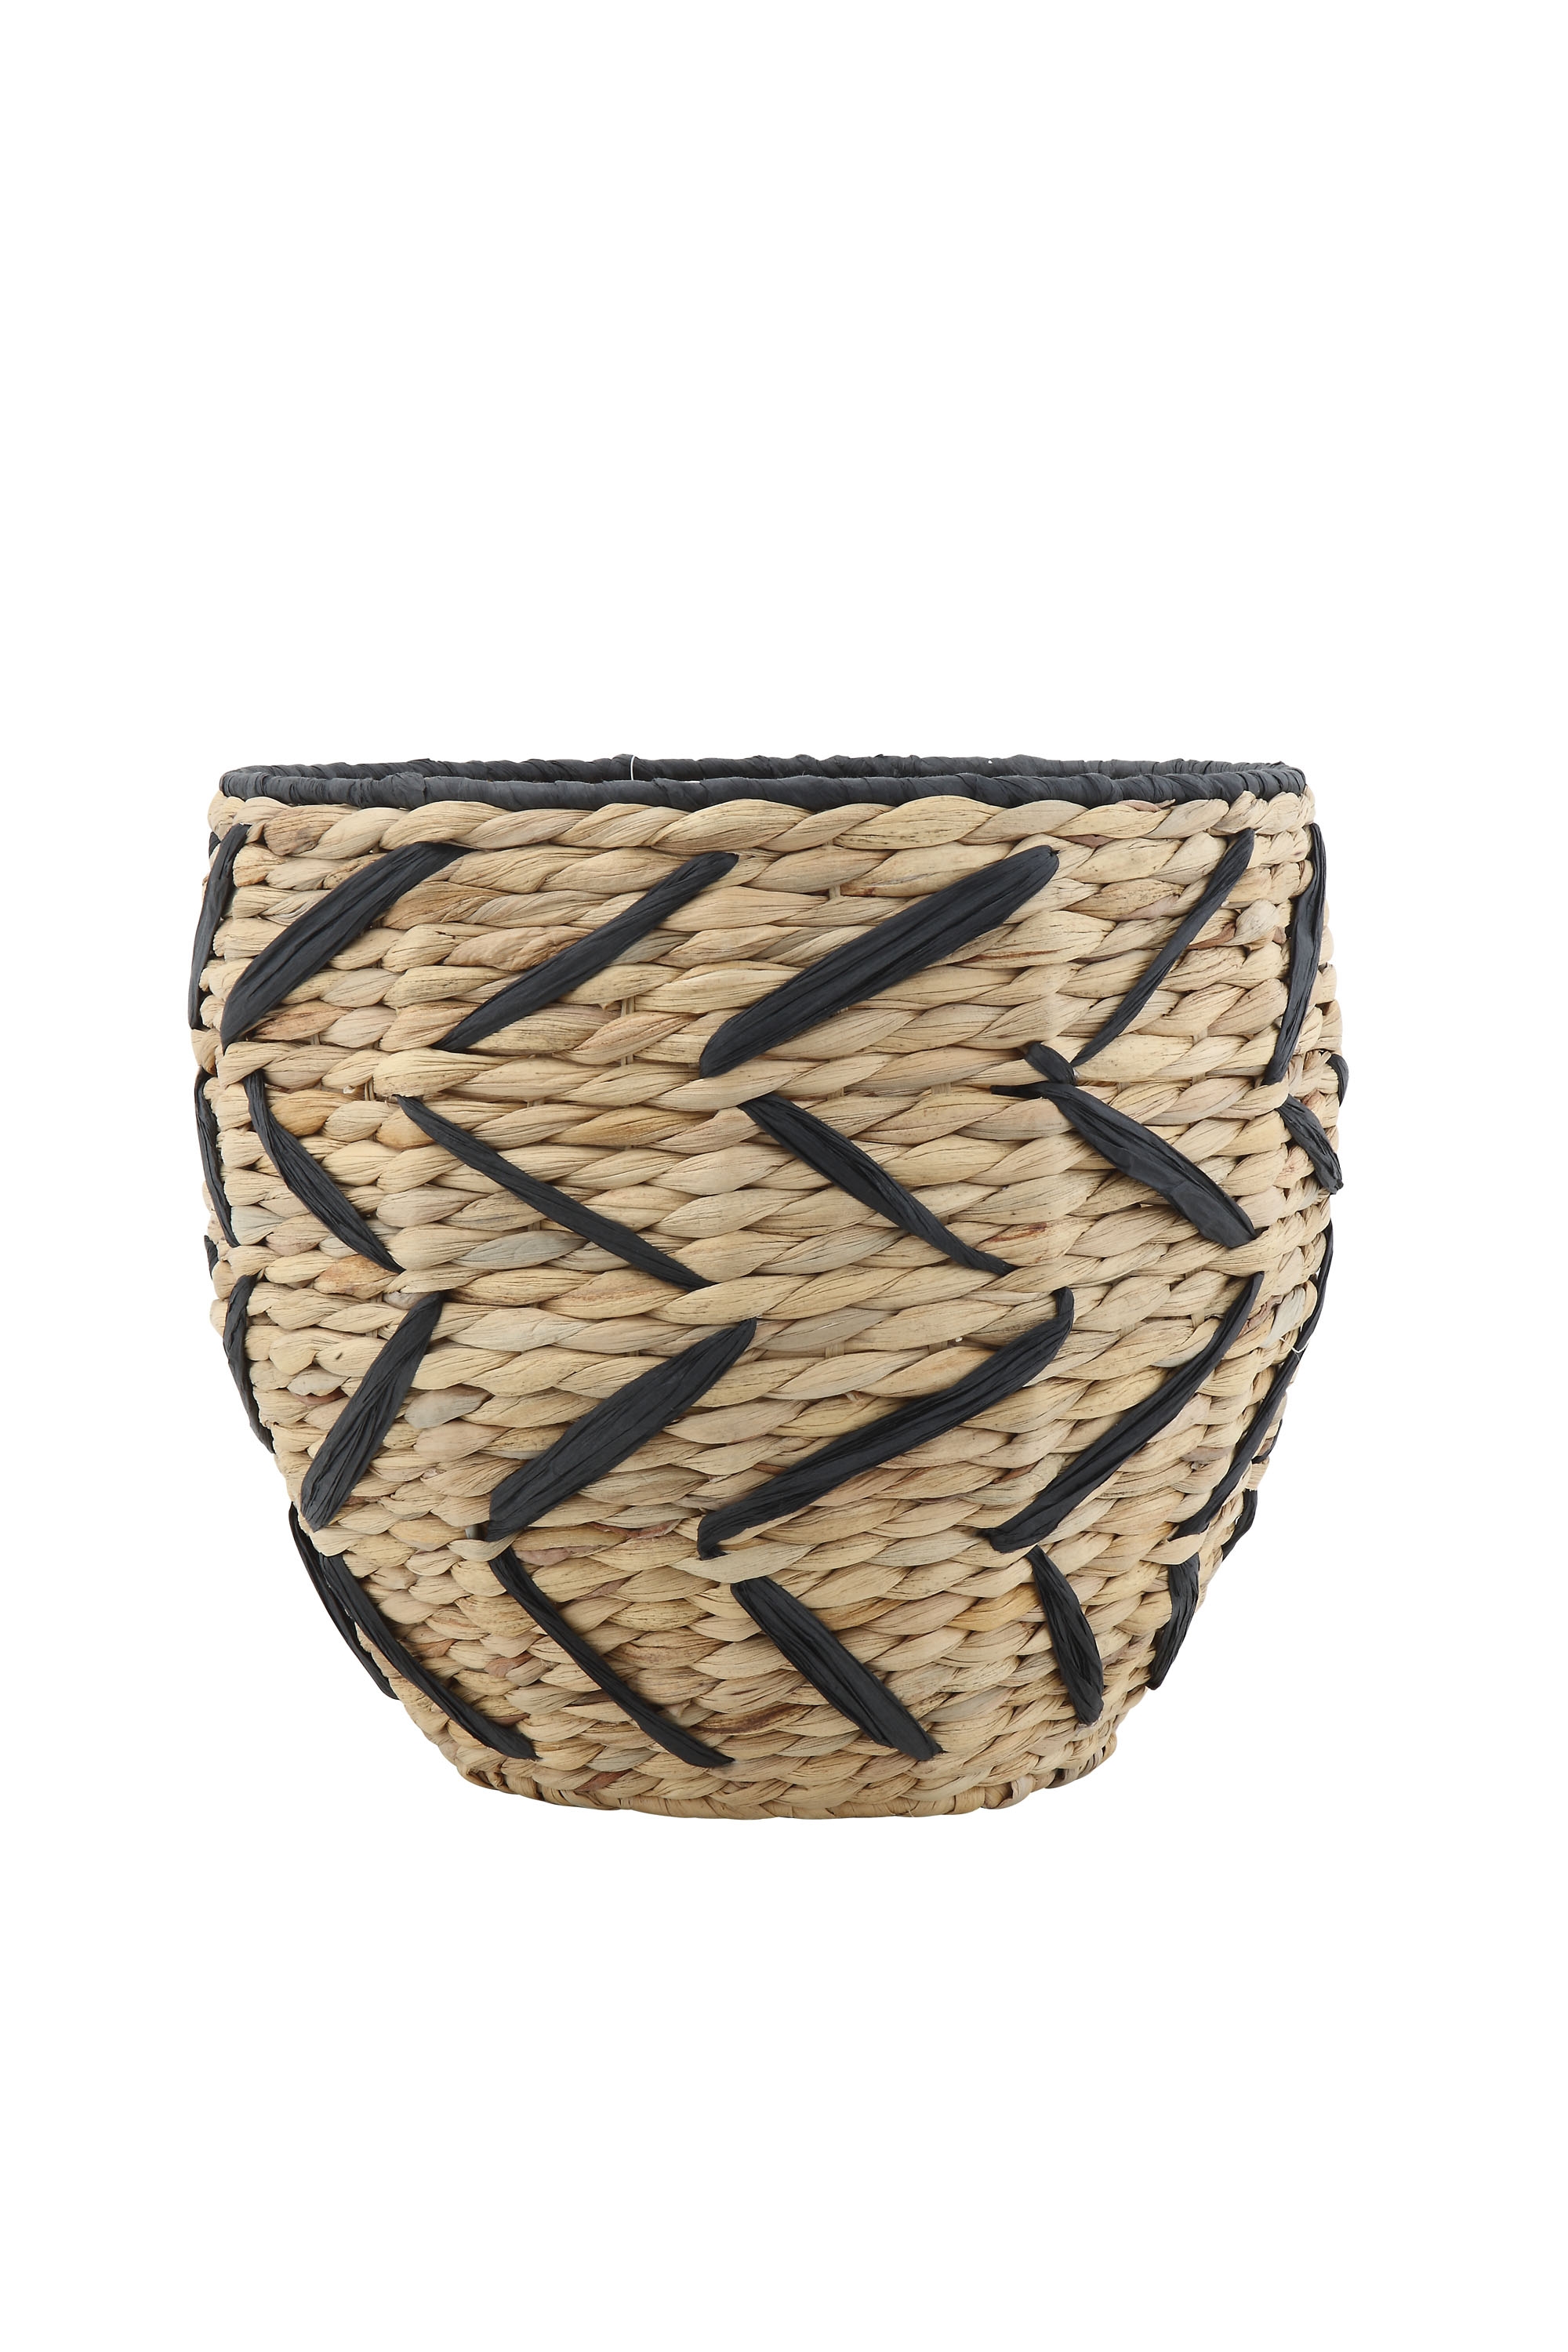 Woven Seagrass Basket with Black Design & Rim - Image 0